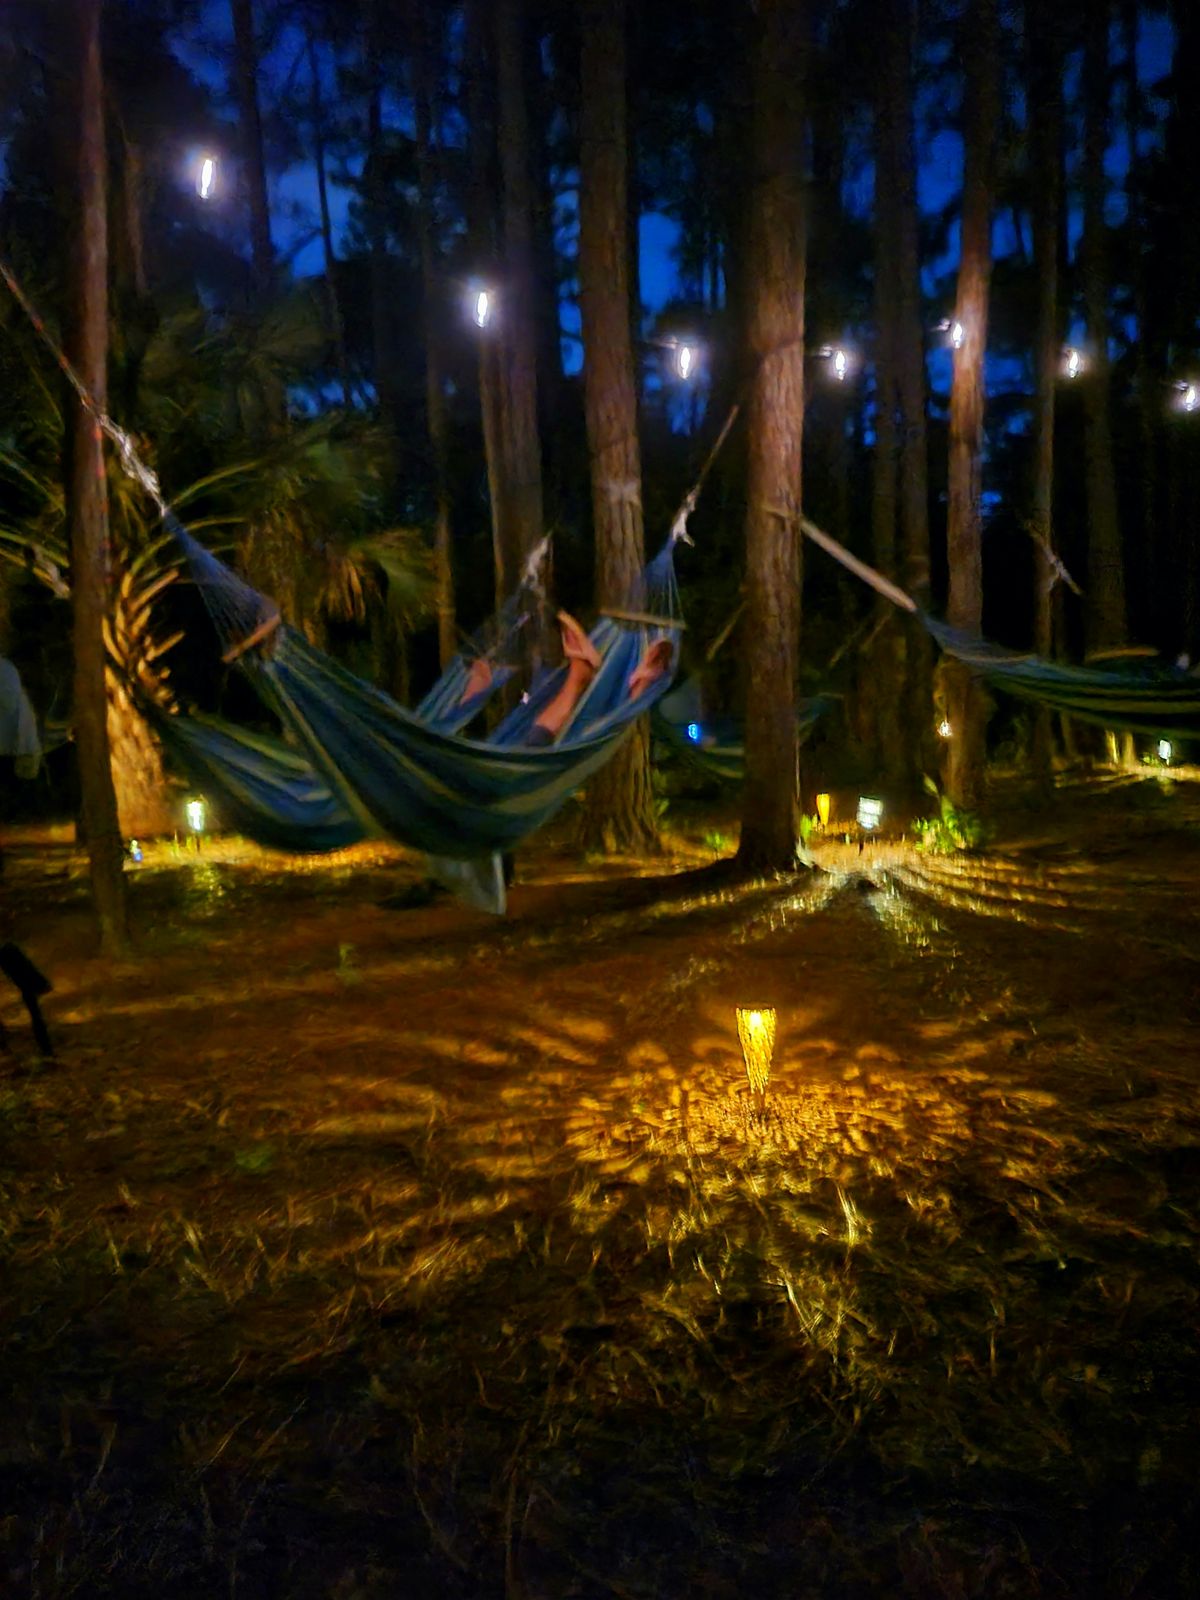 Moonlit Meditation and Sound Bath in Pine Forest Hammocks